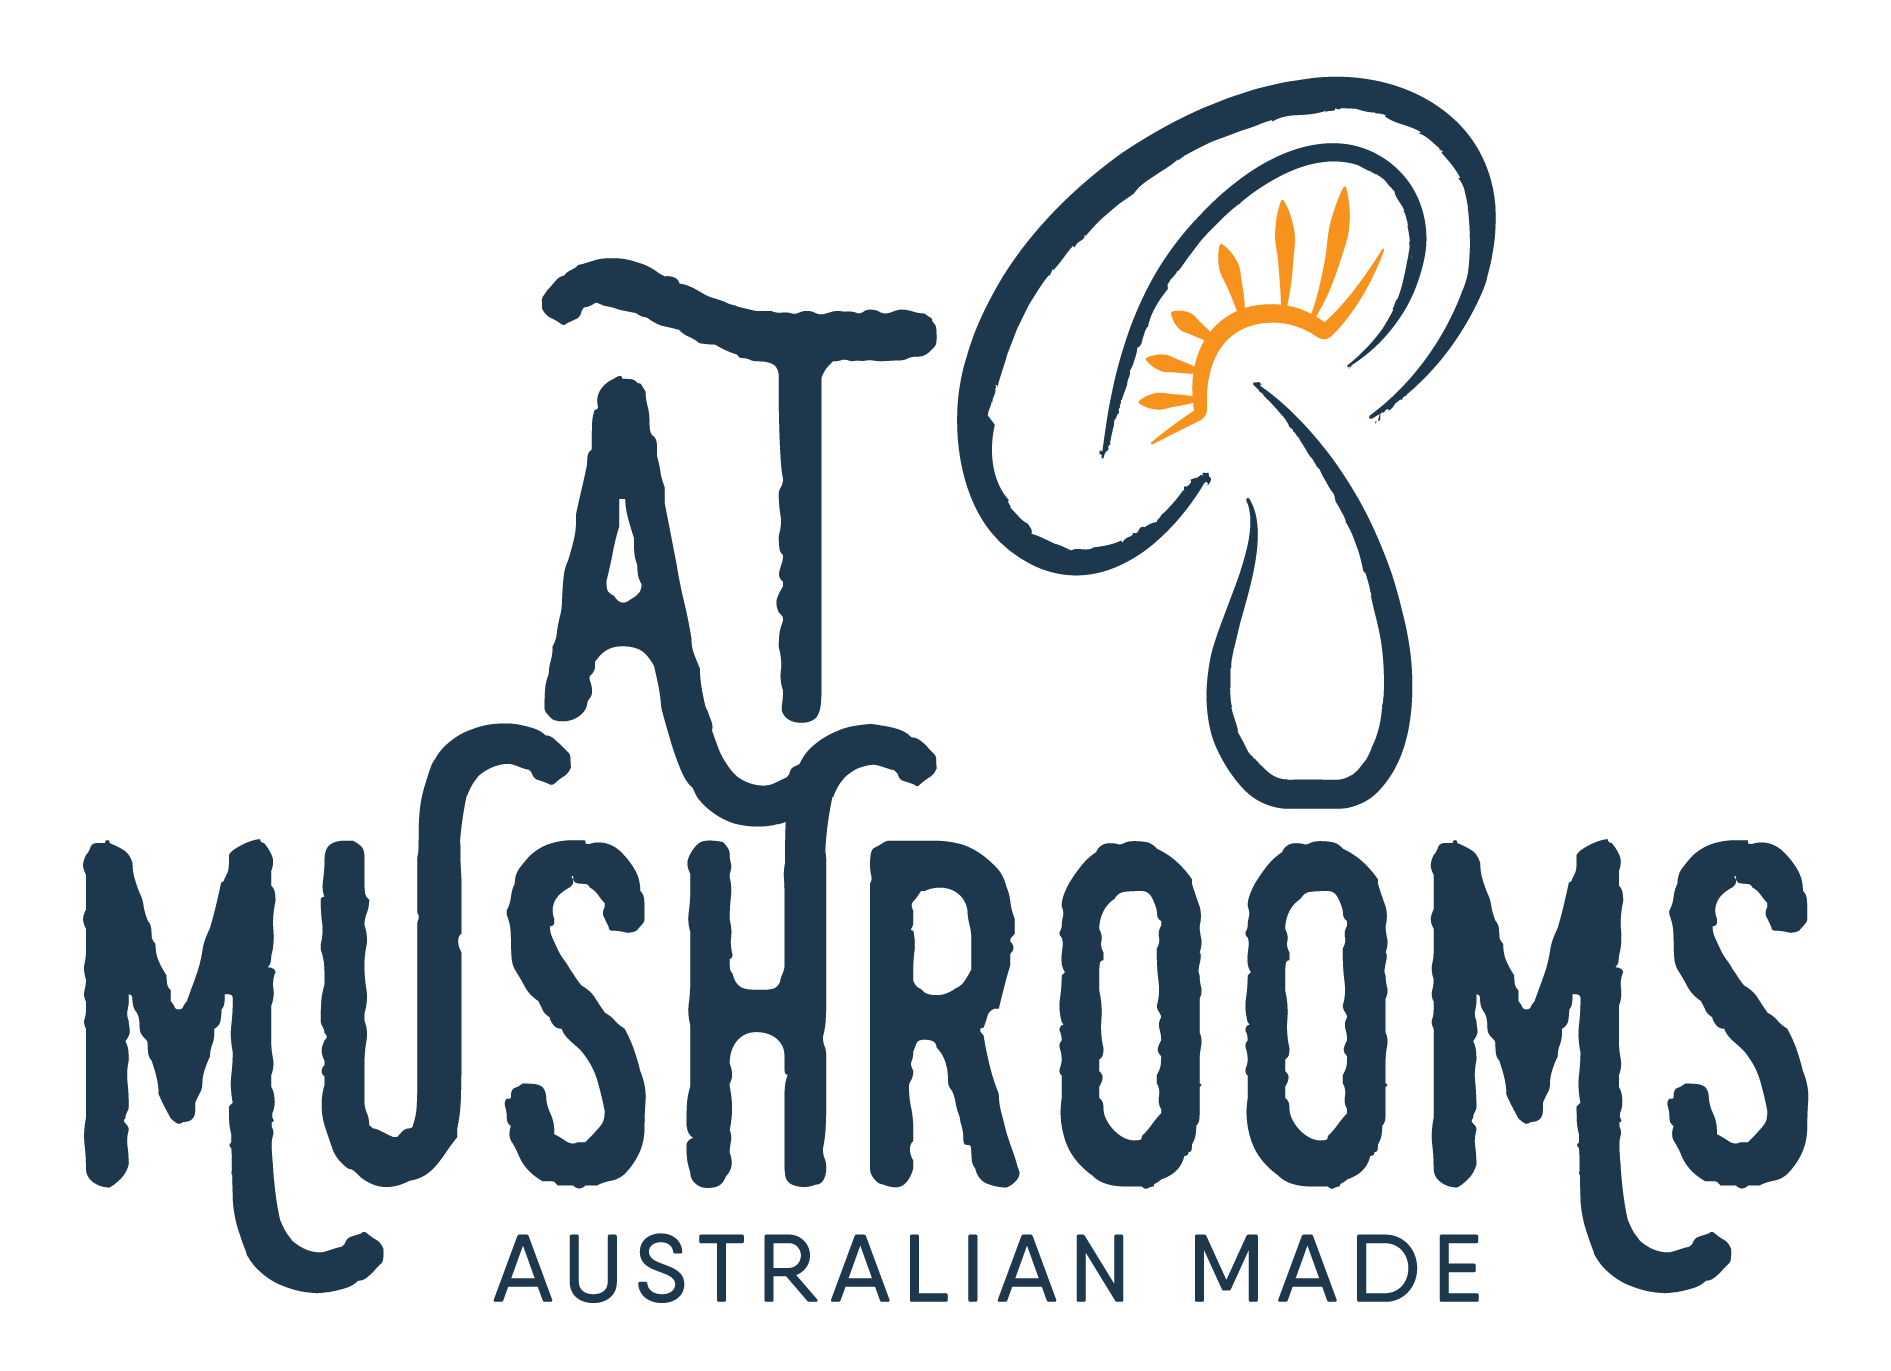 AT Mushrooms Australian Made Chaga Logo, Mushroom Gills Orange